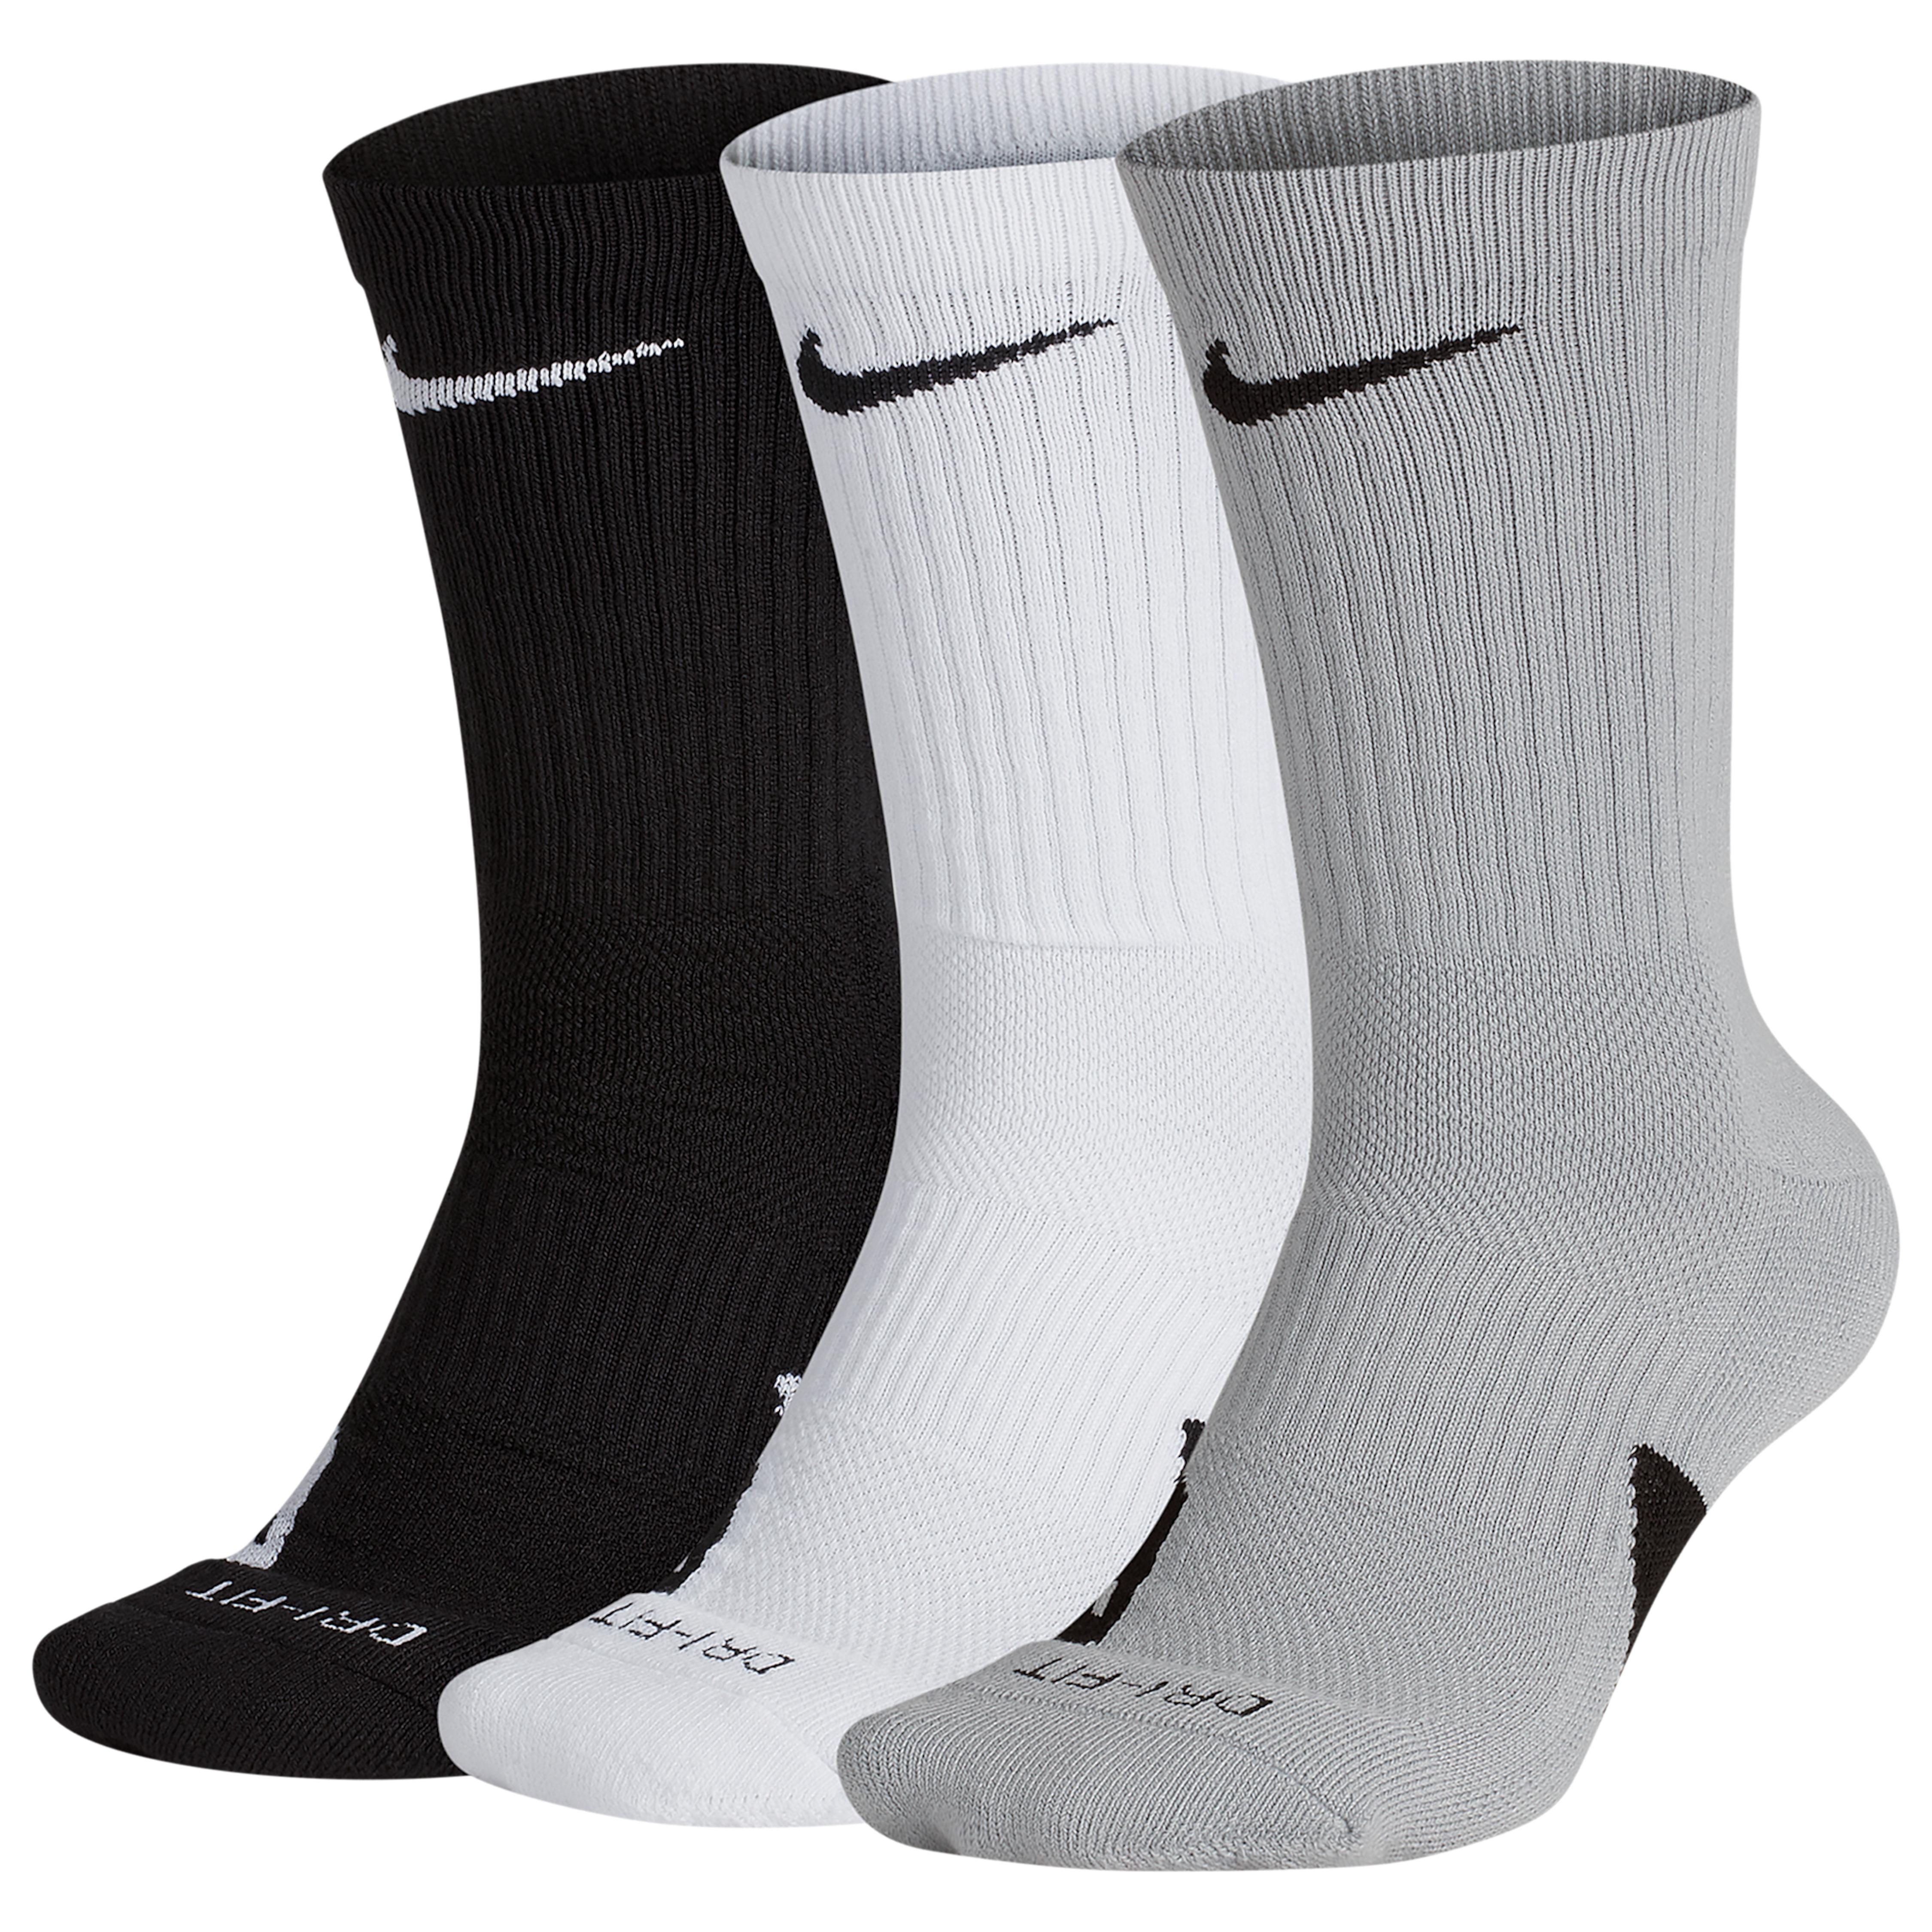 eastbay nike elite socks